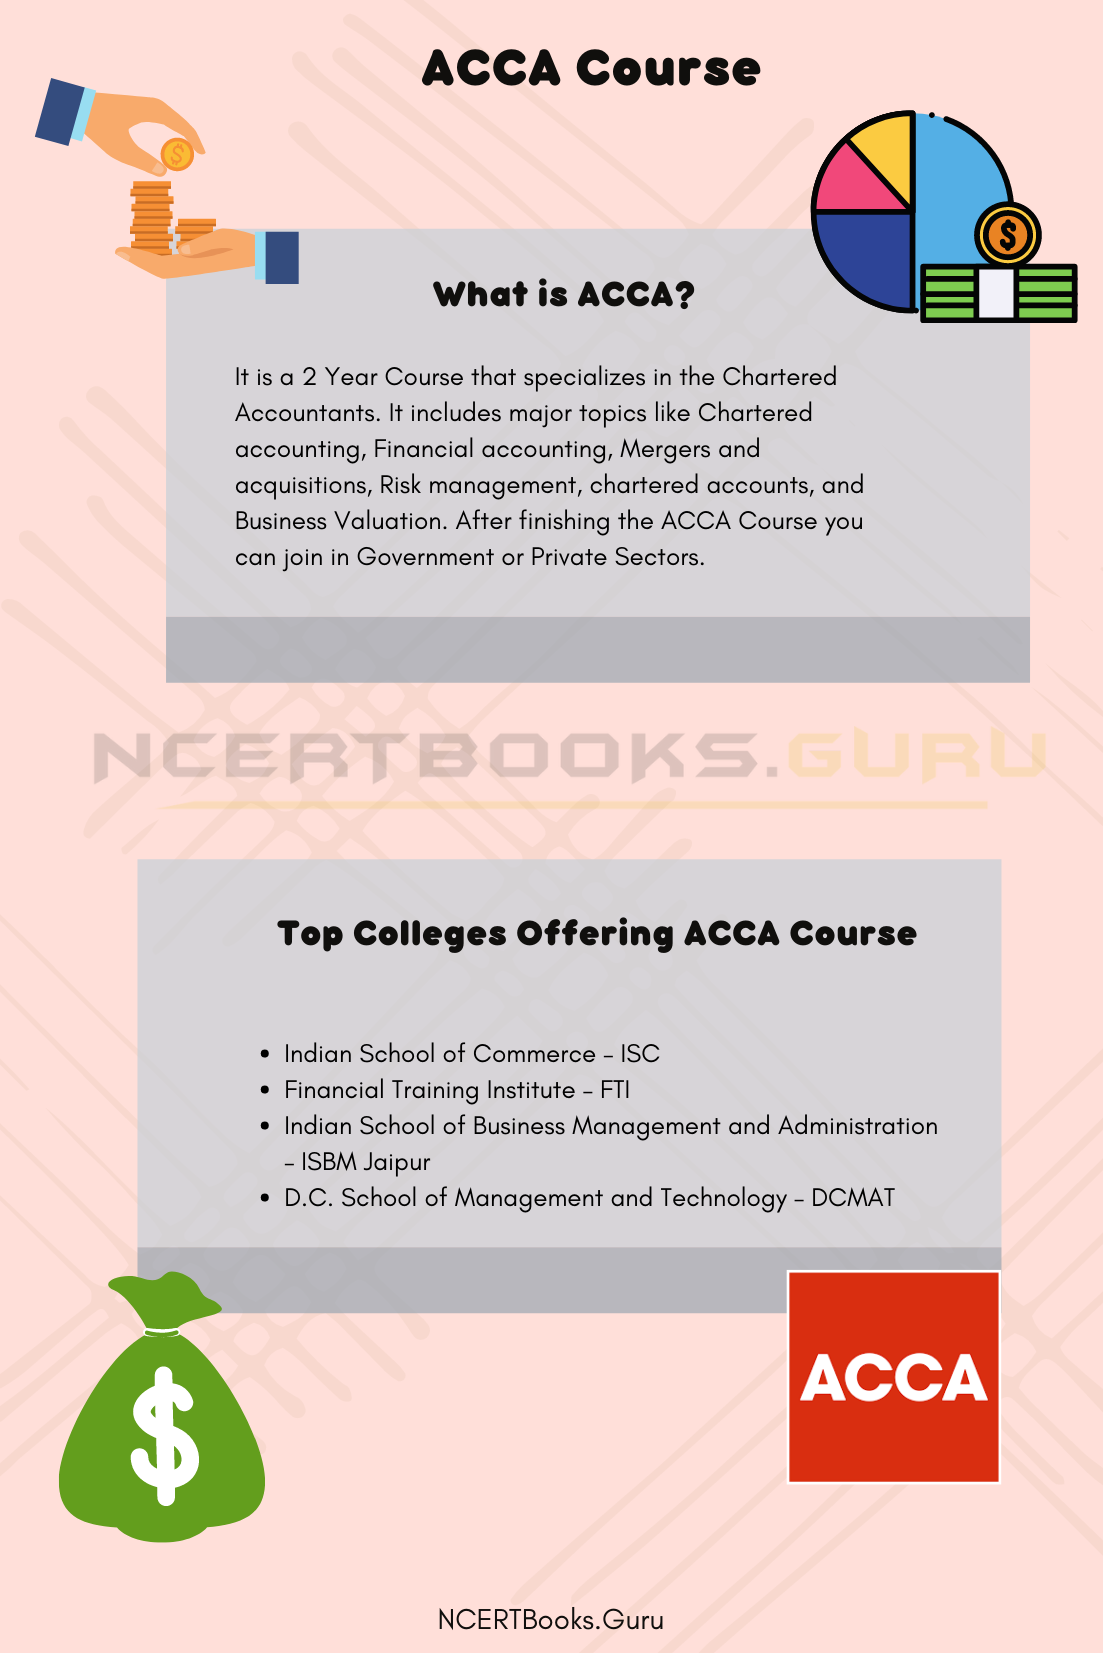 ACCA Course Details